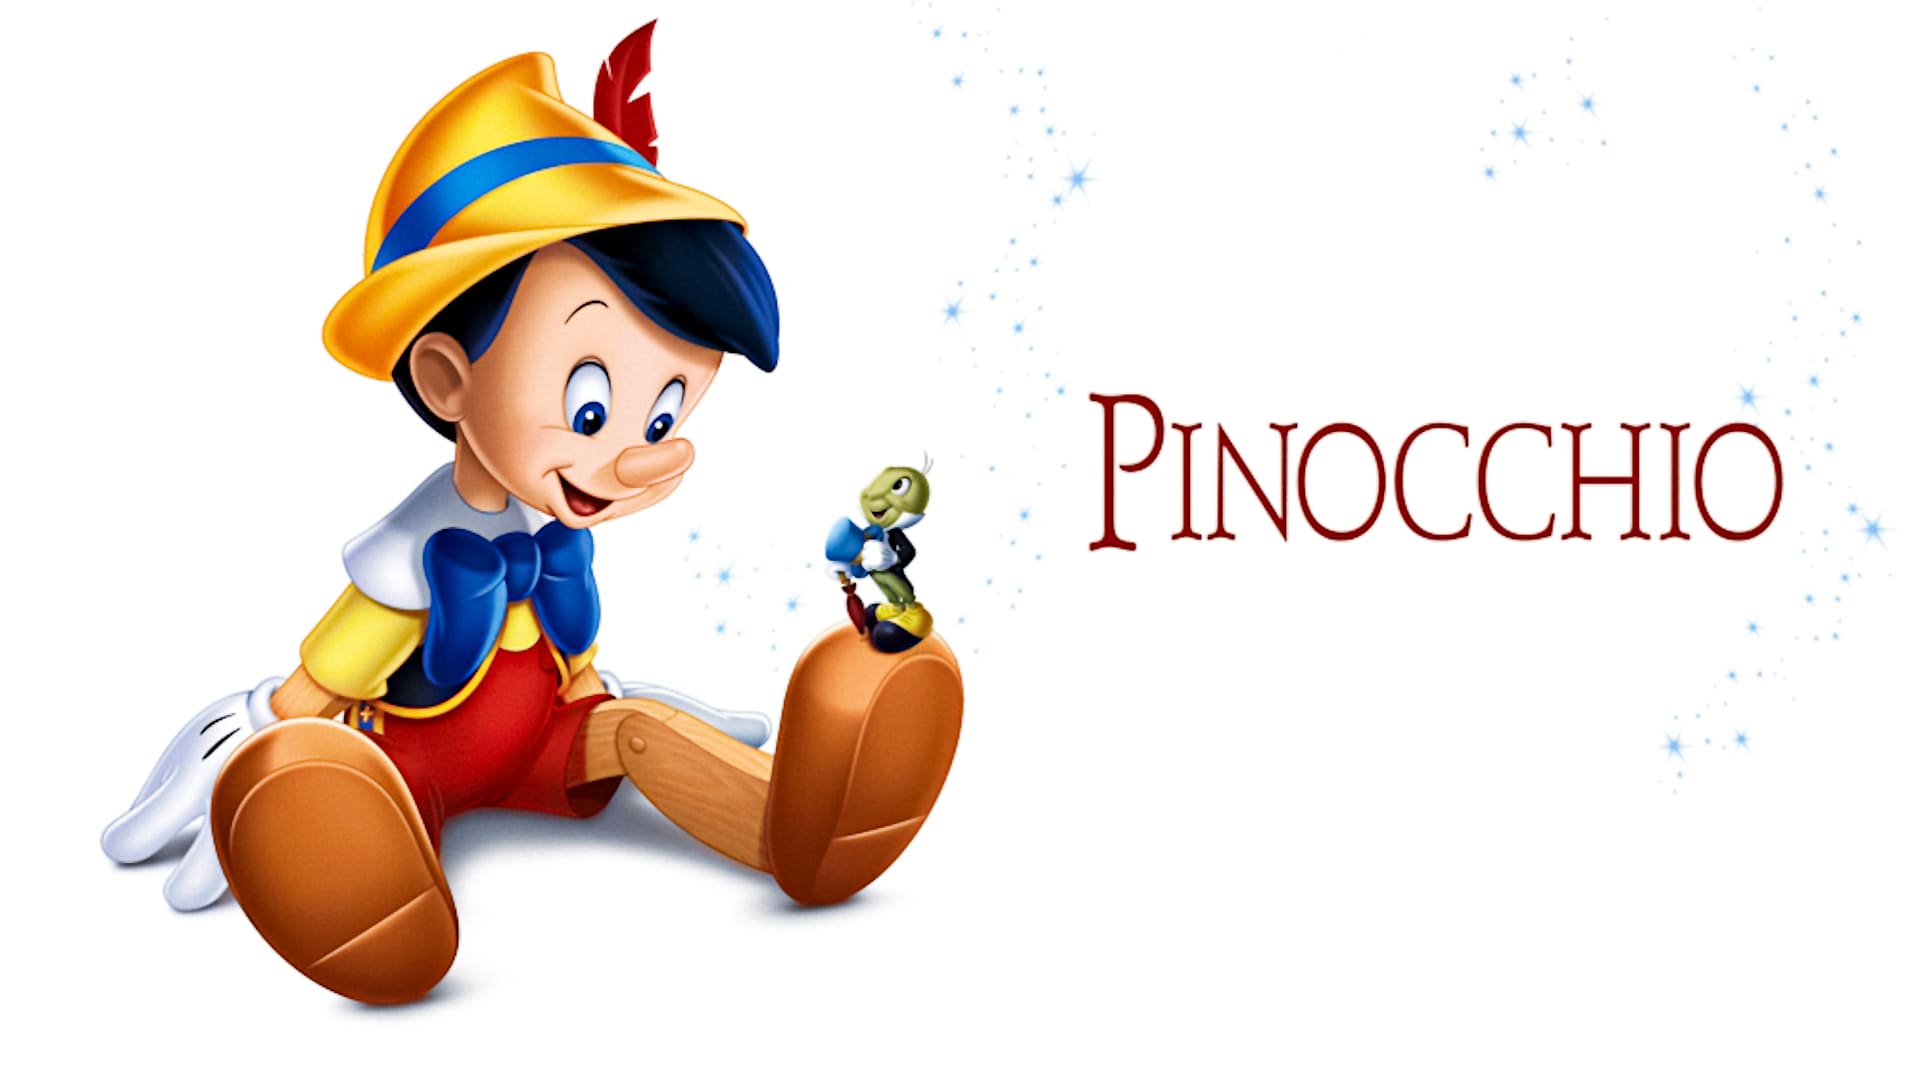 Pinokkio (1940)